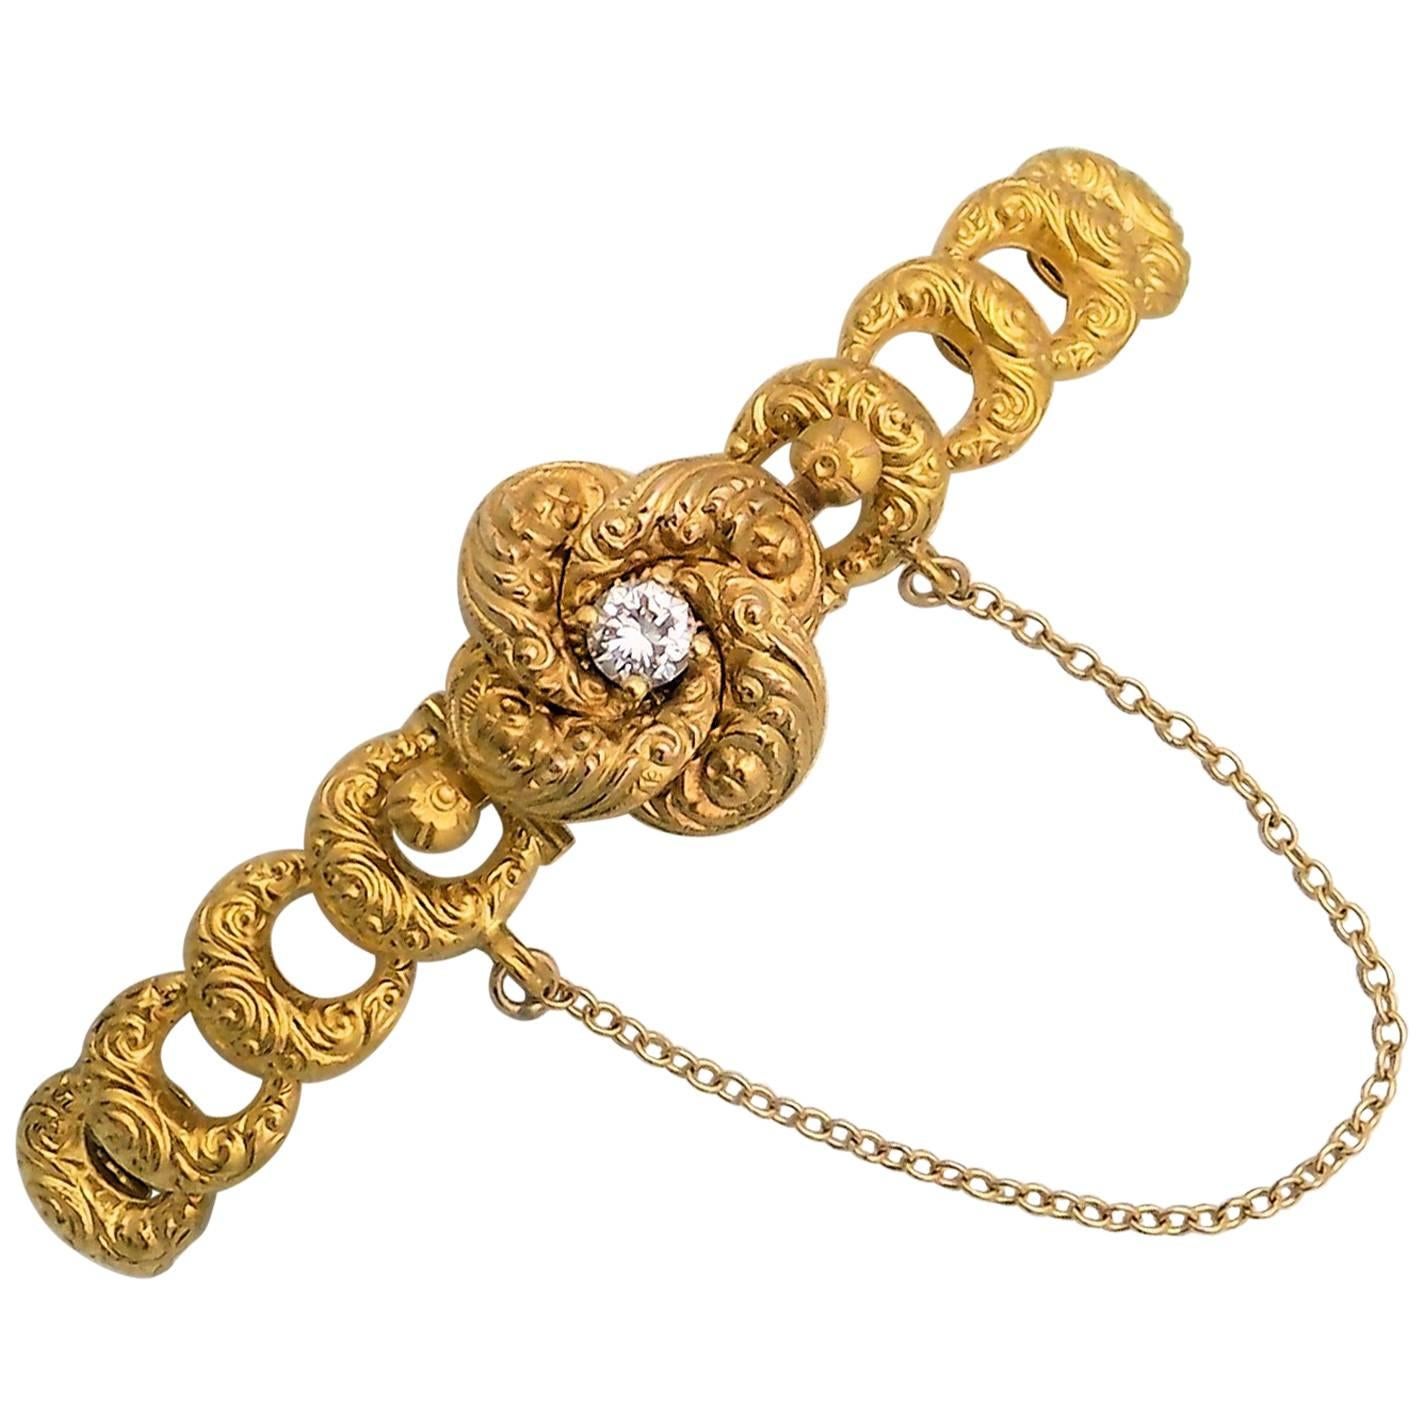 Antique Gold and Diamond Bracelet by Krementz For Sale